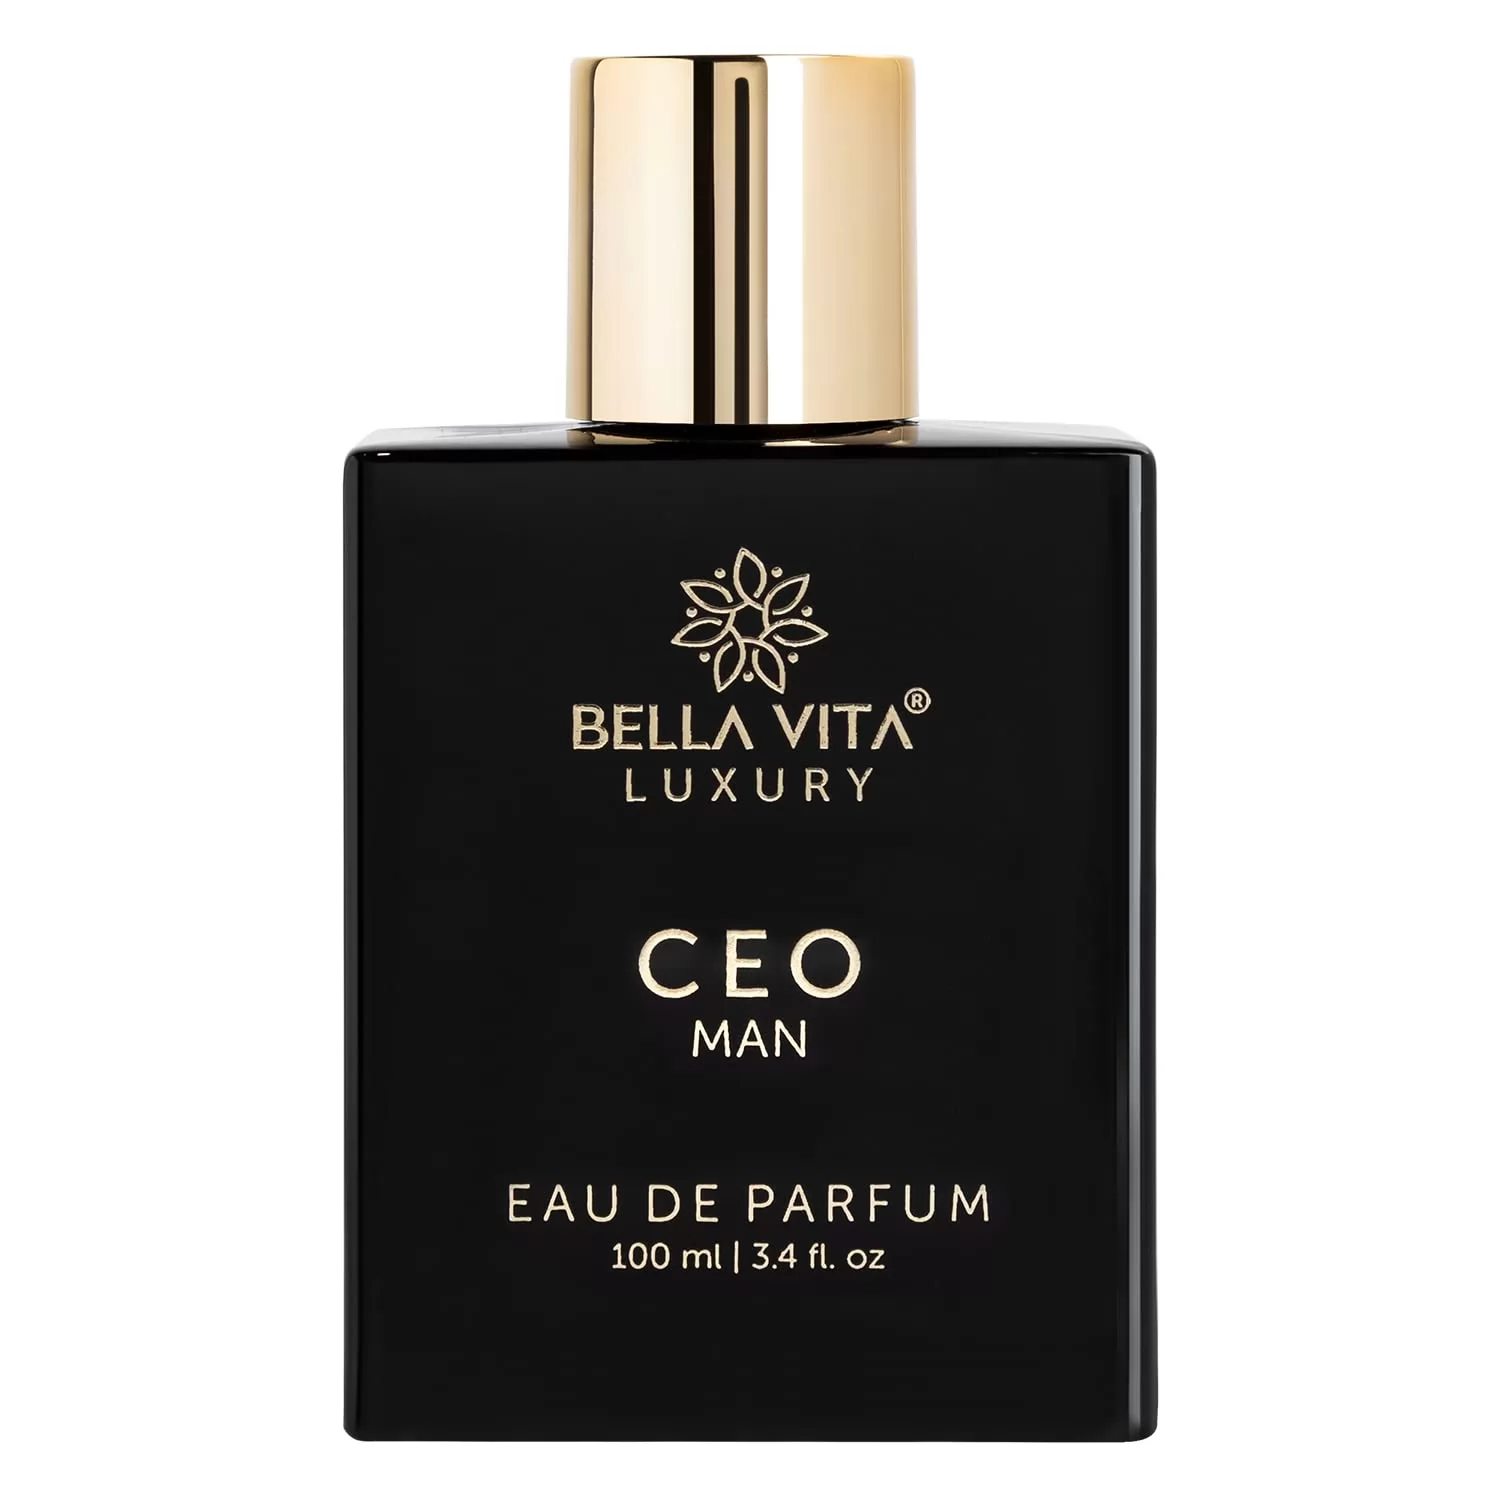  Bella Vita Luxury CEO MAN Eau De Parfum Perfume